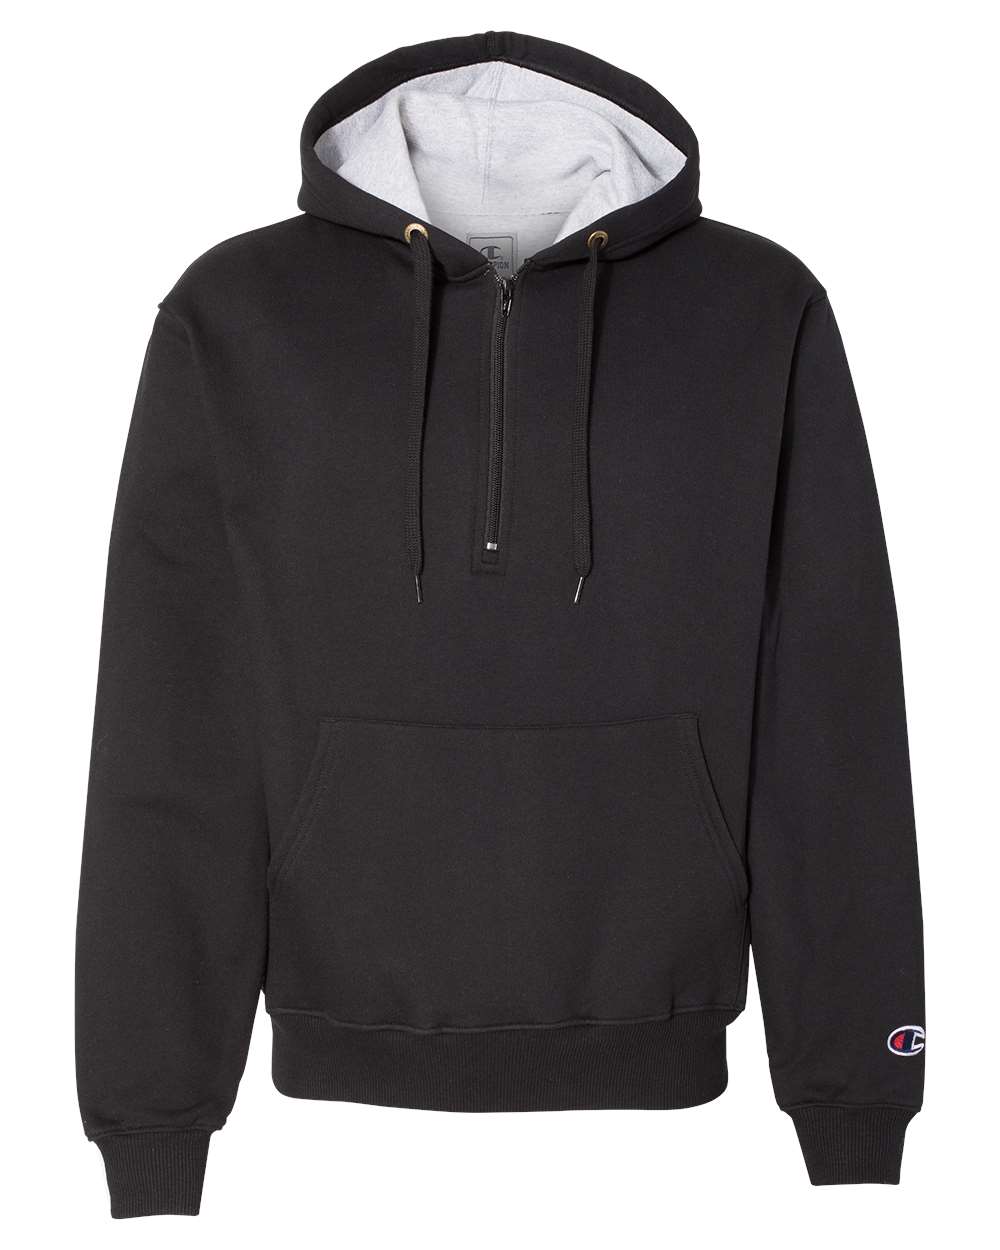 Champion Cotton Max Hooded Quarter-Zip Sweatshirt S185 S-3XL | eBay